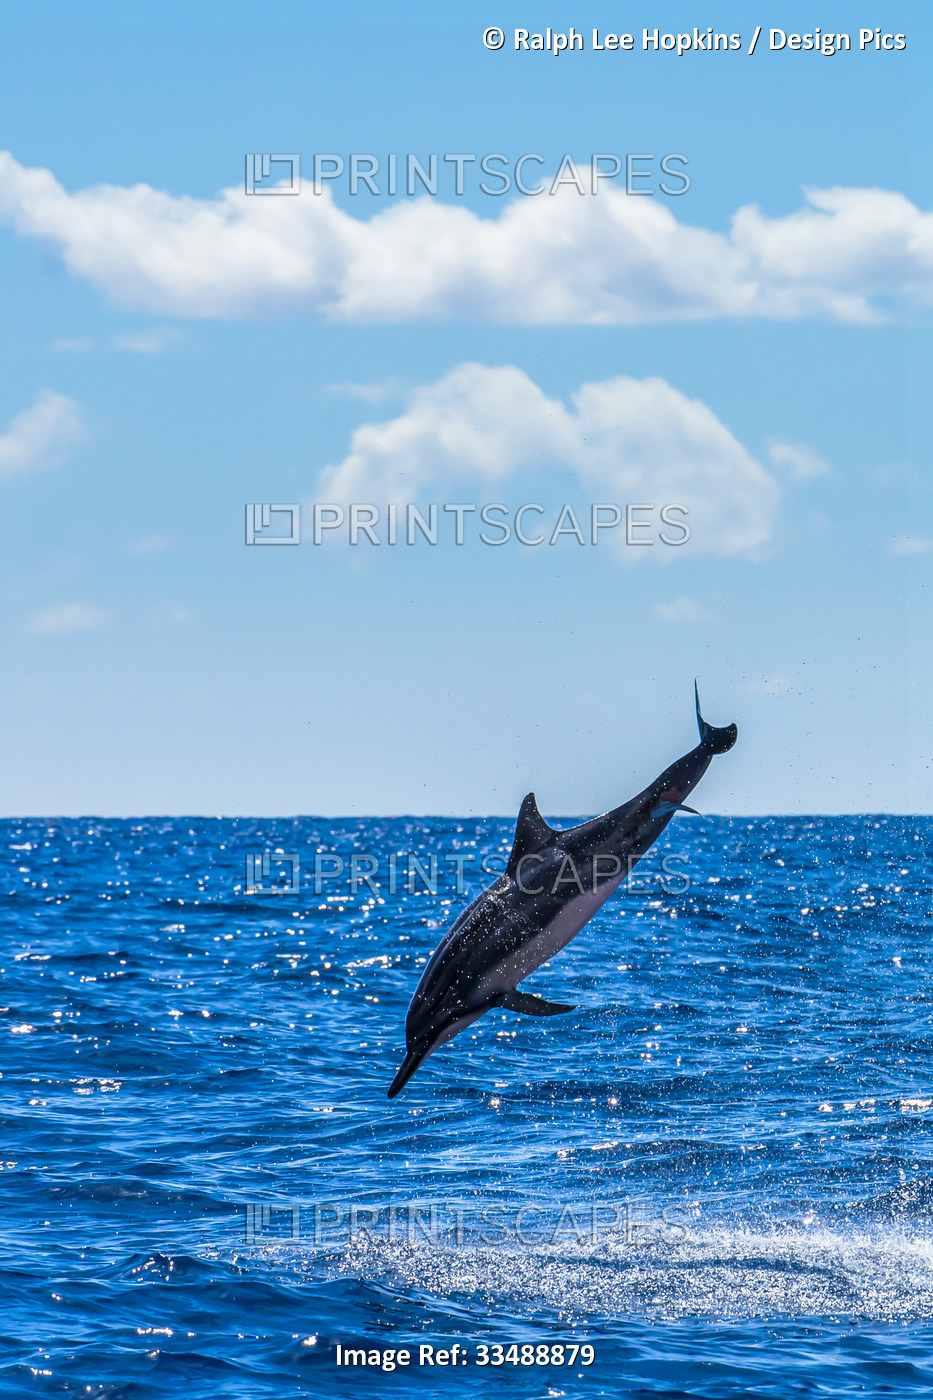 A Hawaiian spinner dolphin leaps over the Pacific Ocean.